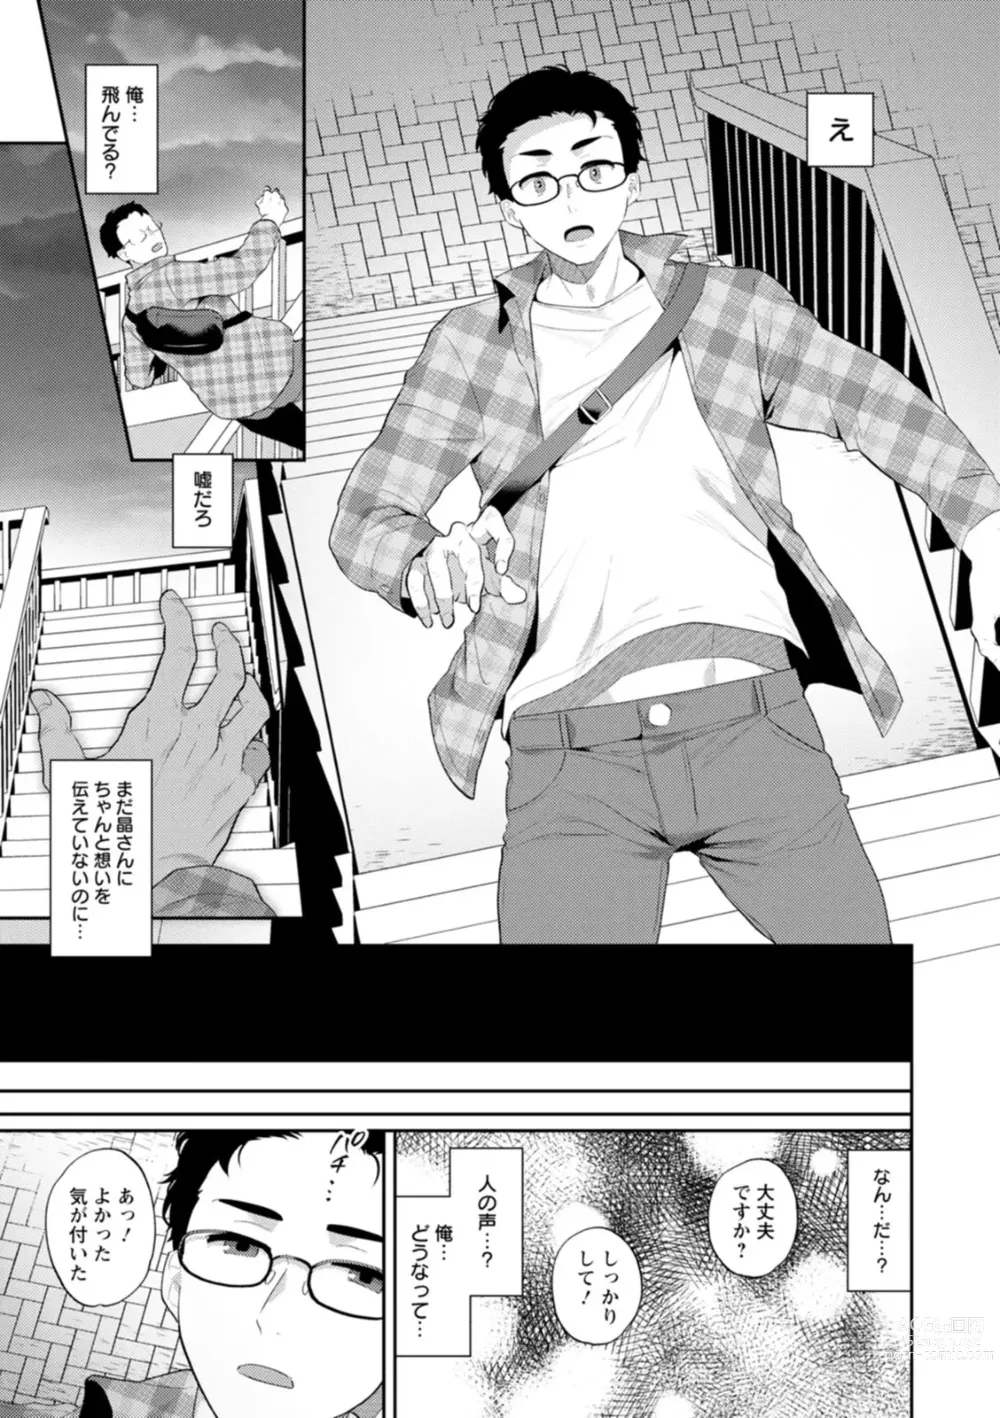 Page 9 of manga Kimito Torokete Musubarete